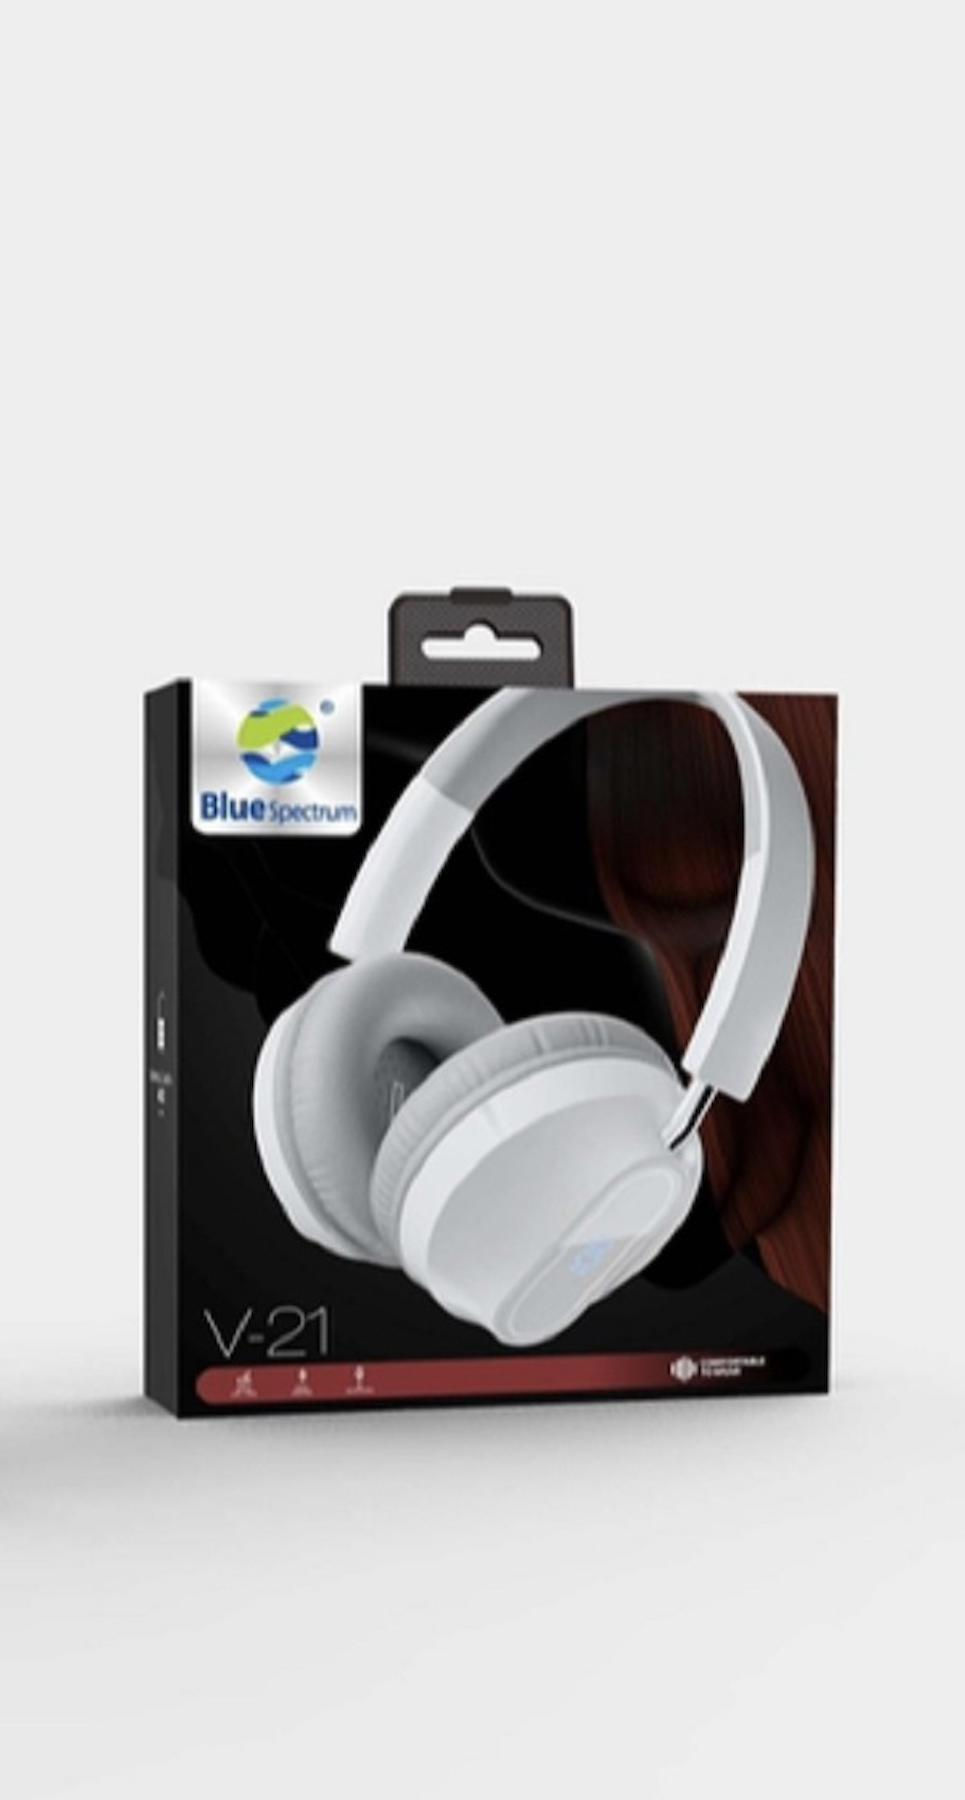 Blue Spectrum S. V-21 5.2 Kablosuz Kulak Üstü Bluetooth Kulaklık Beyaz